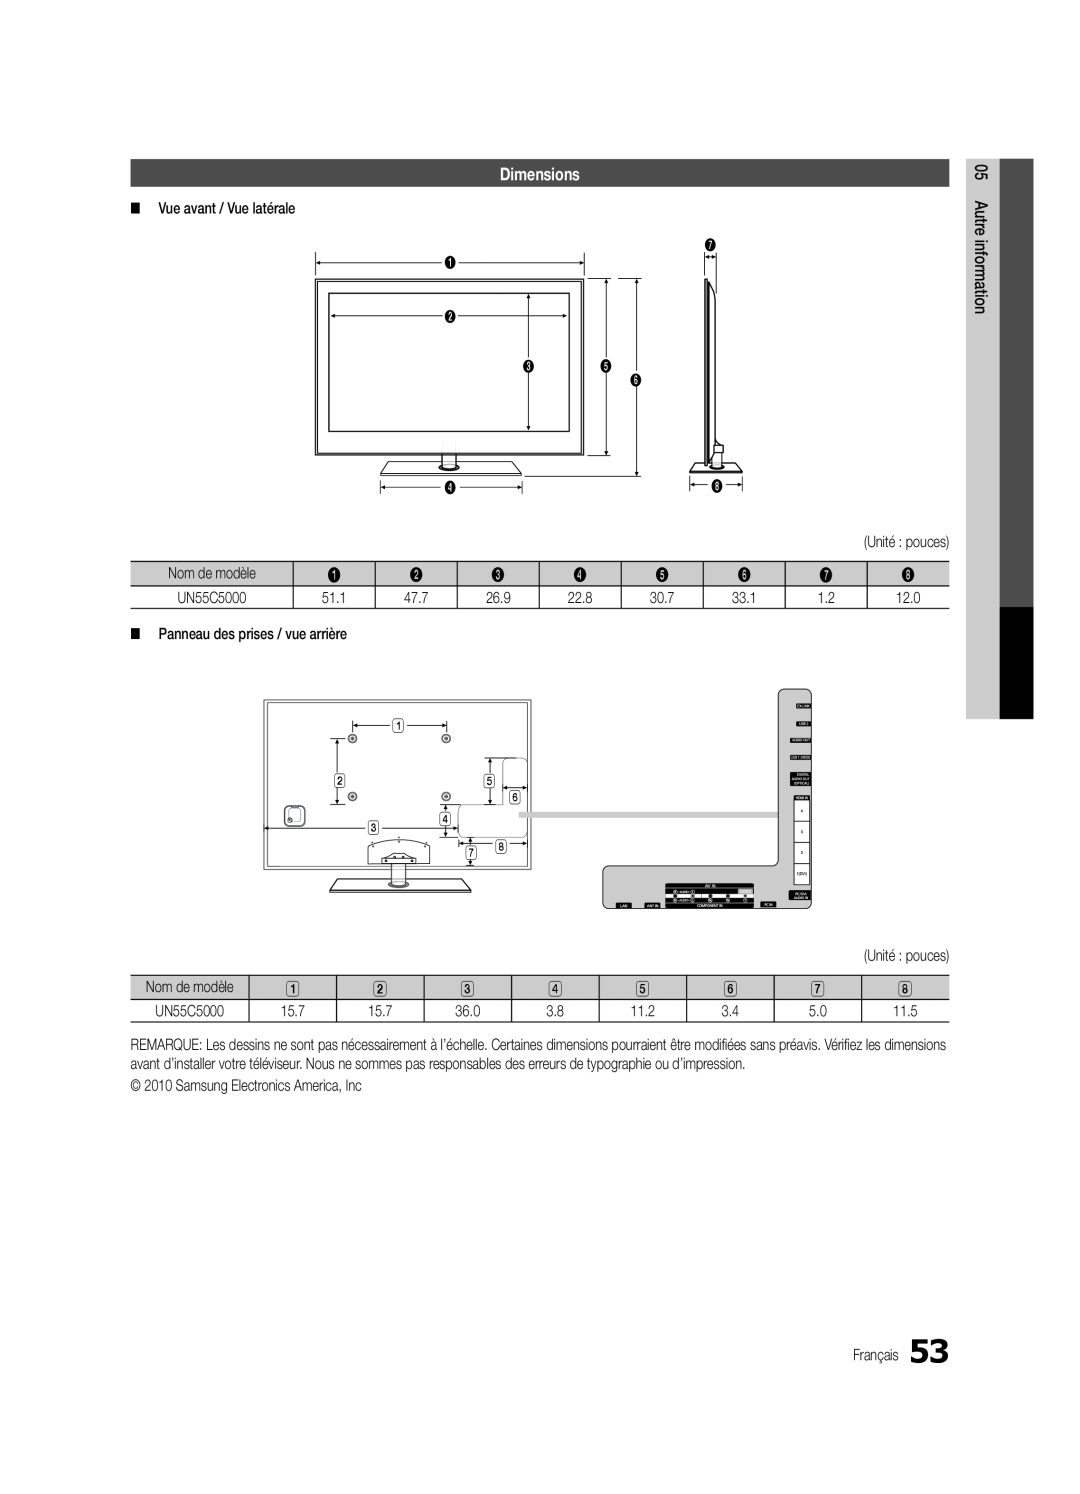 Samsung UC5000-ZC, BN68-03004B-02 user manual 51.1, 47.7, 26.9, 22.8, 30.7, 33.1, 12.0, Dimensions 